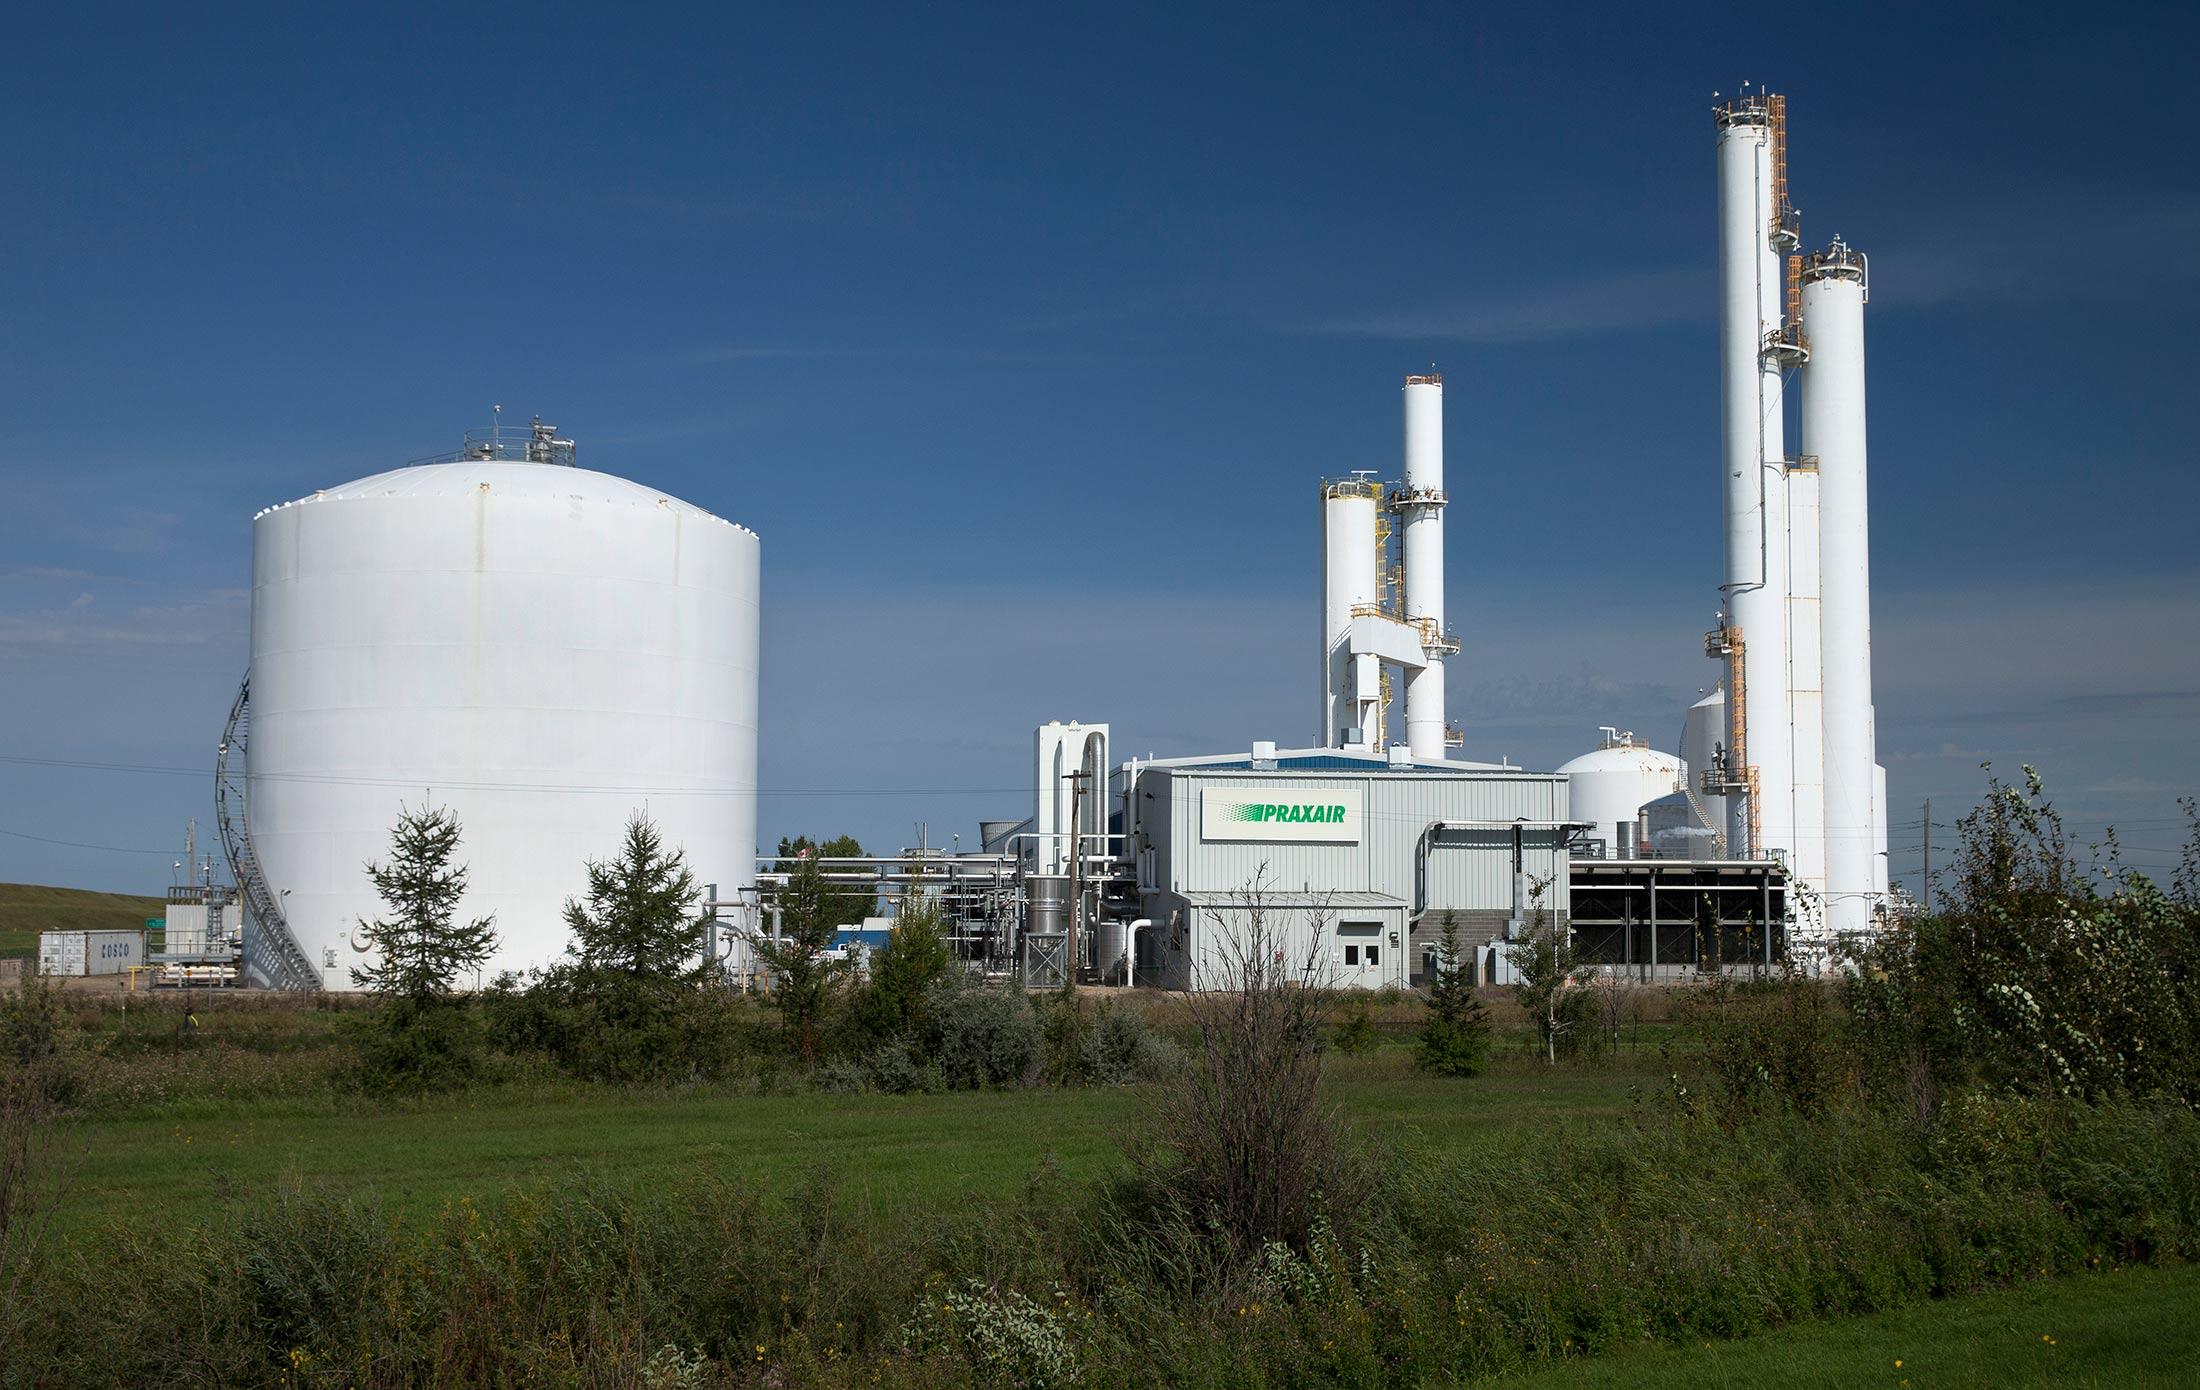 Praxair, producer of industrial gases, plant in Fort Saskatchewan, Alberta on Aug. 30, 2016.
